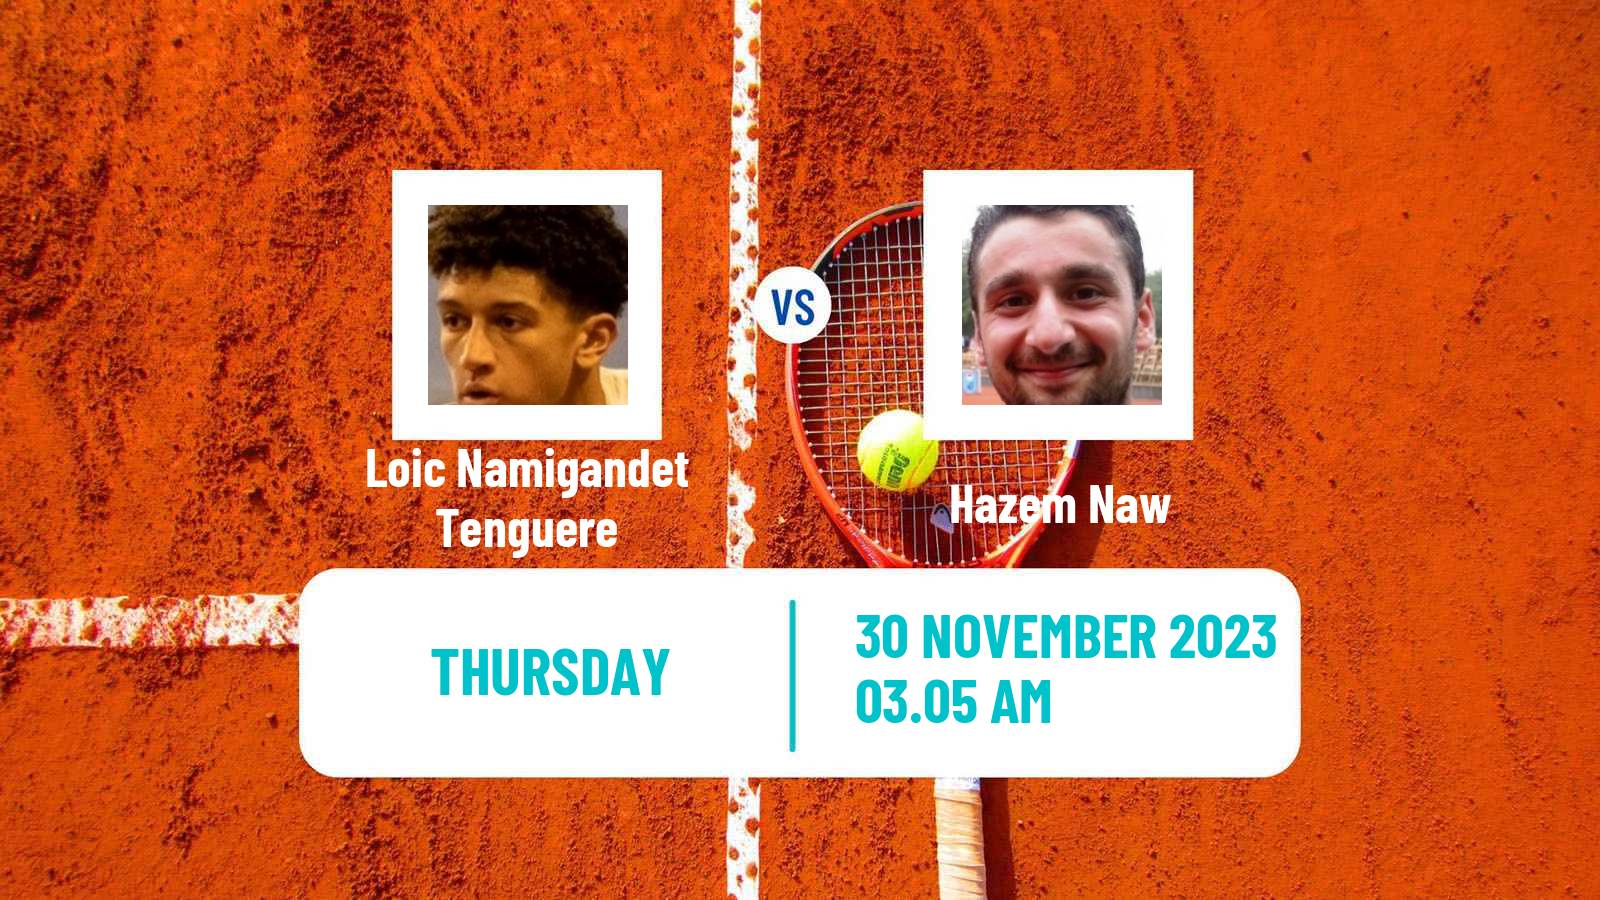 Tennis ITF M15 Madrid 2 Men Loic Namigandet Tenguere - Hazem Naw